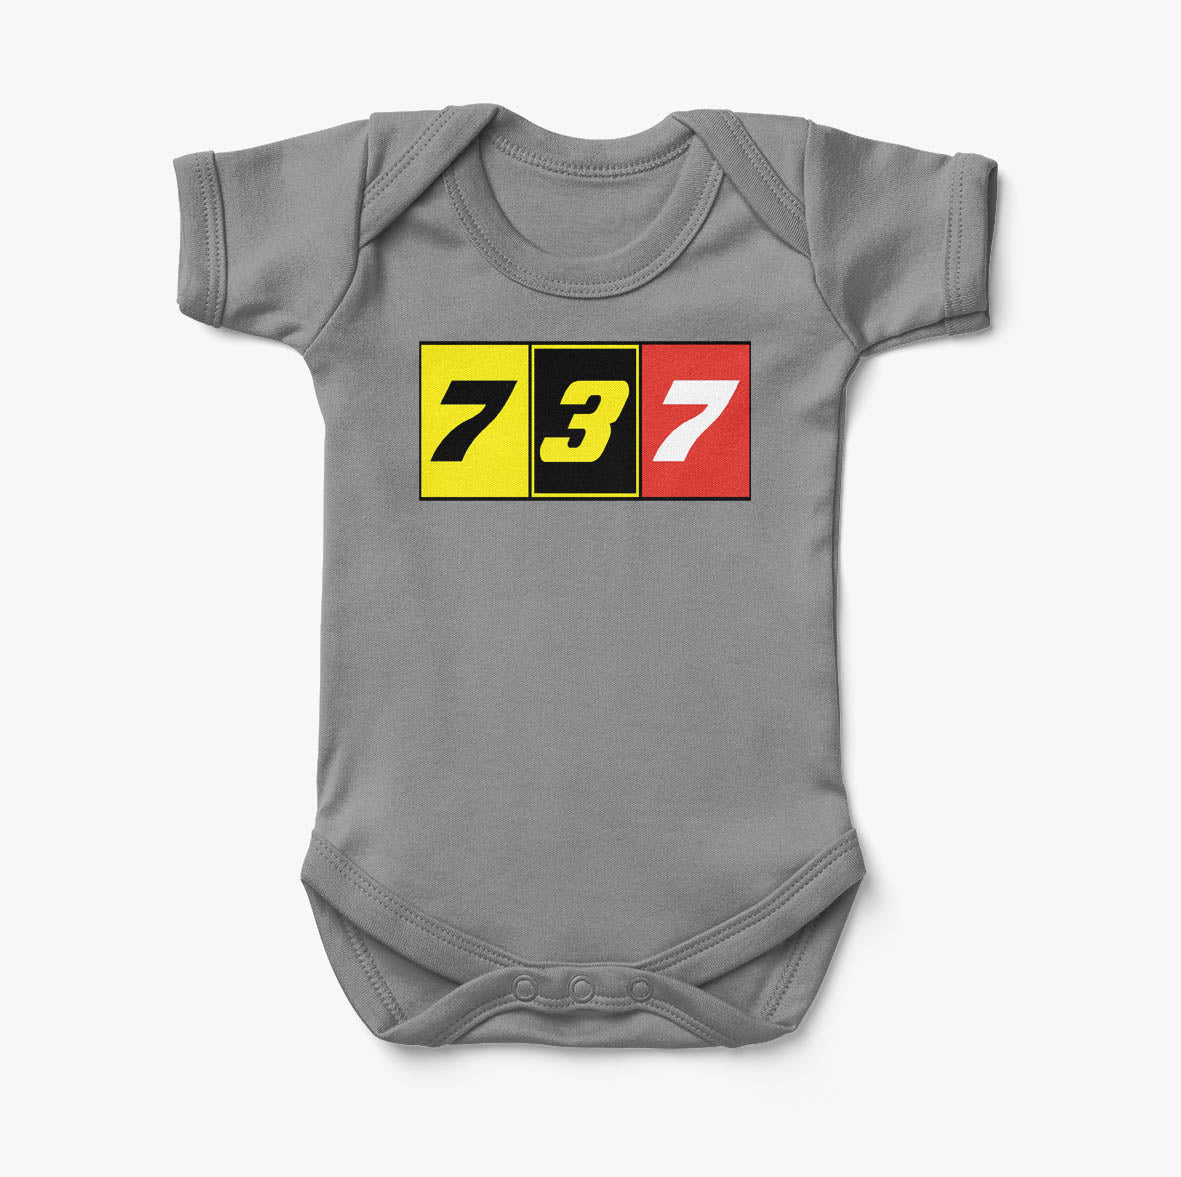 Flat Colourful 737 Designed Baby Bodysuits